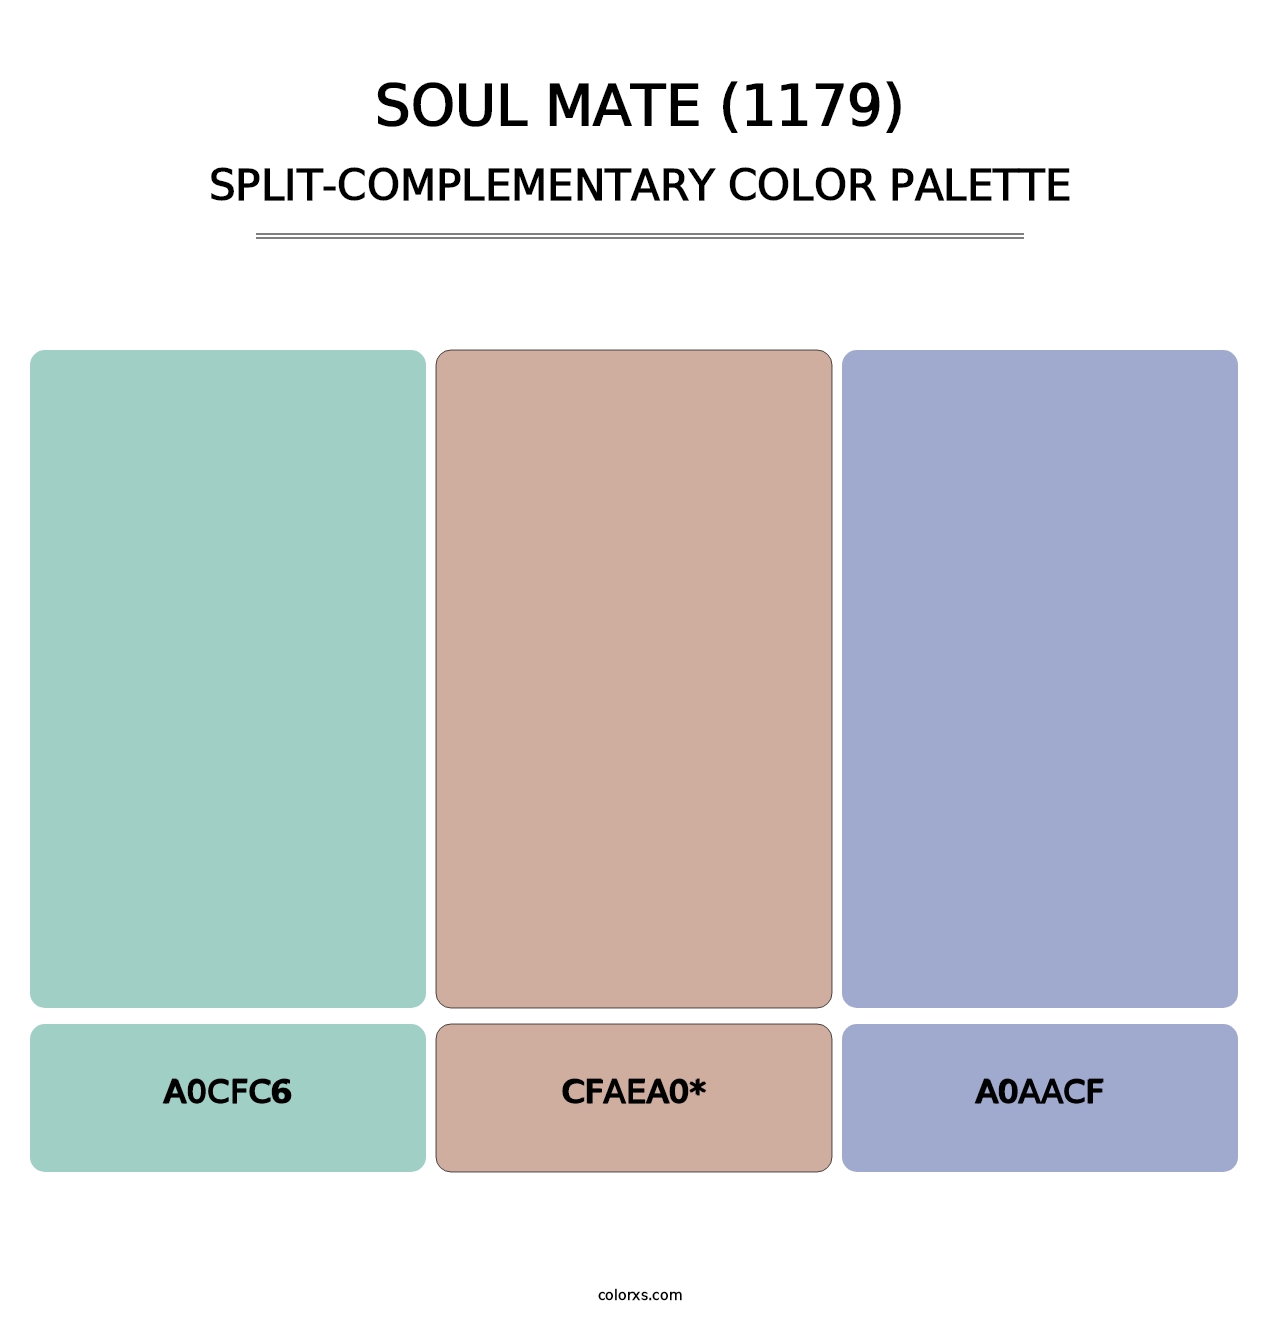 Soul Mate (1179) - Split-Complementary Color Palette